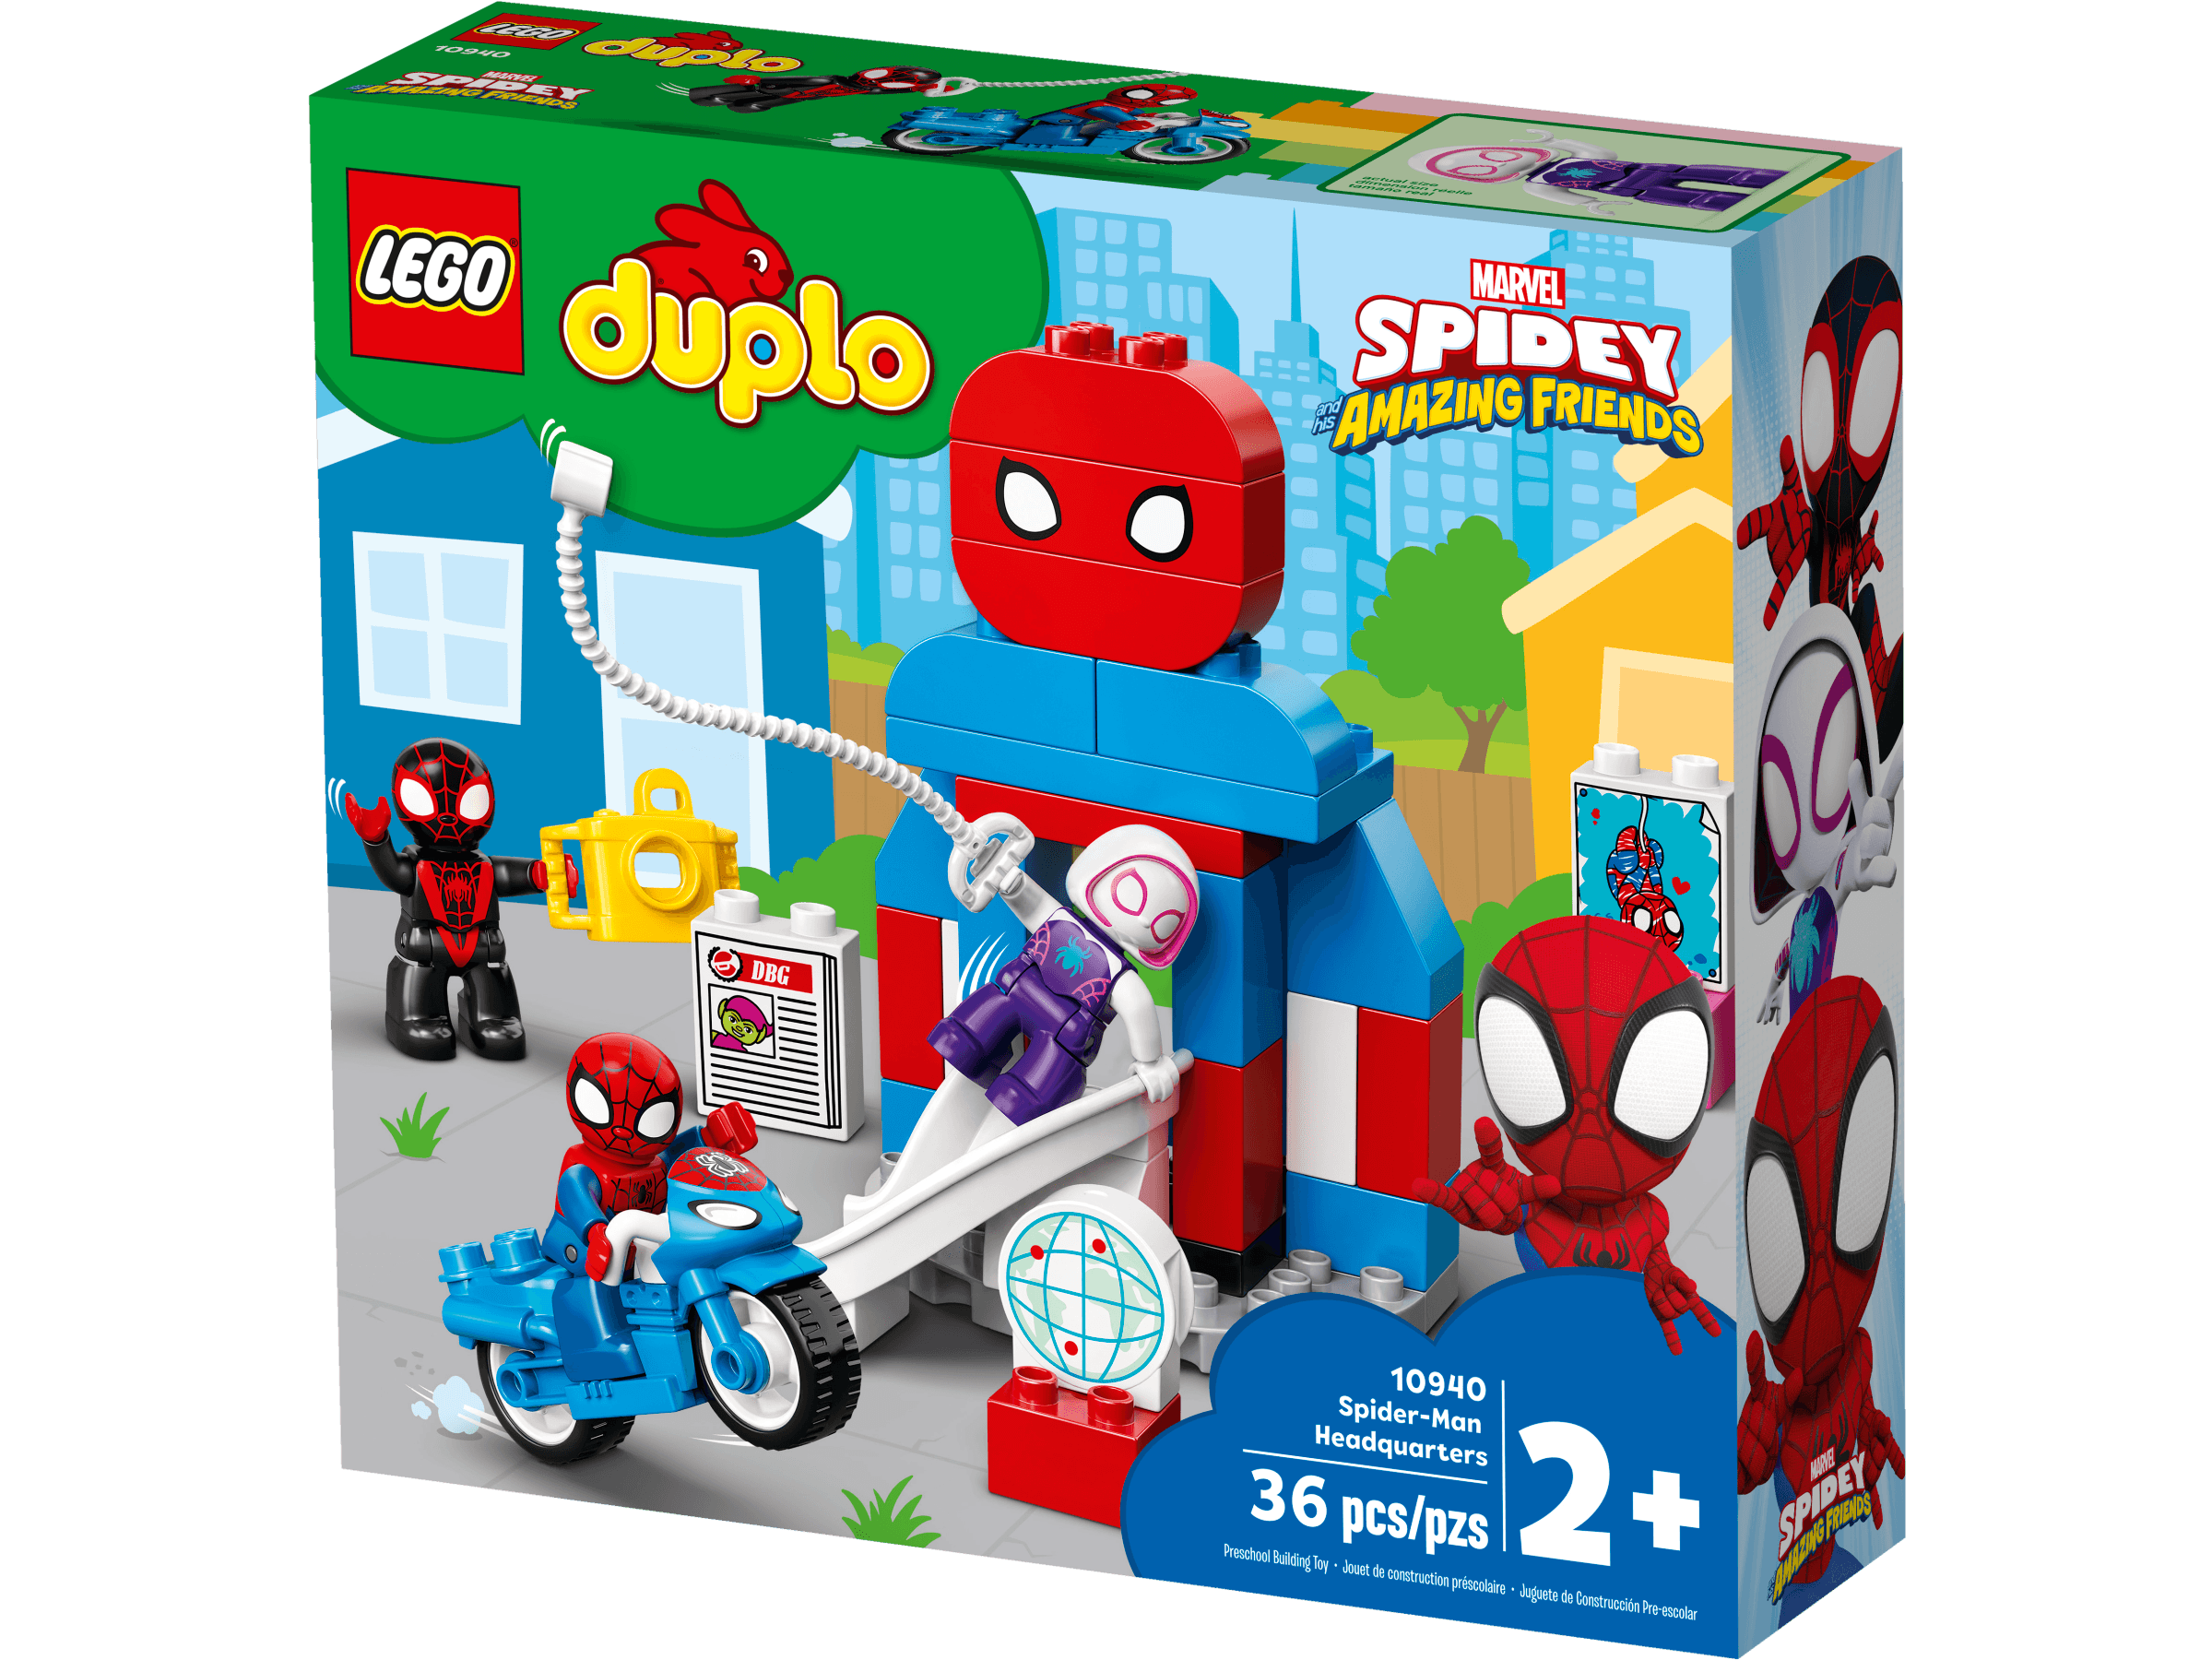 NUOVO ORIGINALE LEGO Minifigure "Spider-Man Spidey" MARVEL Amazing Friends 